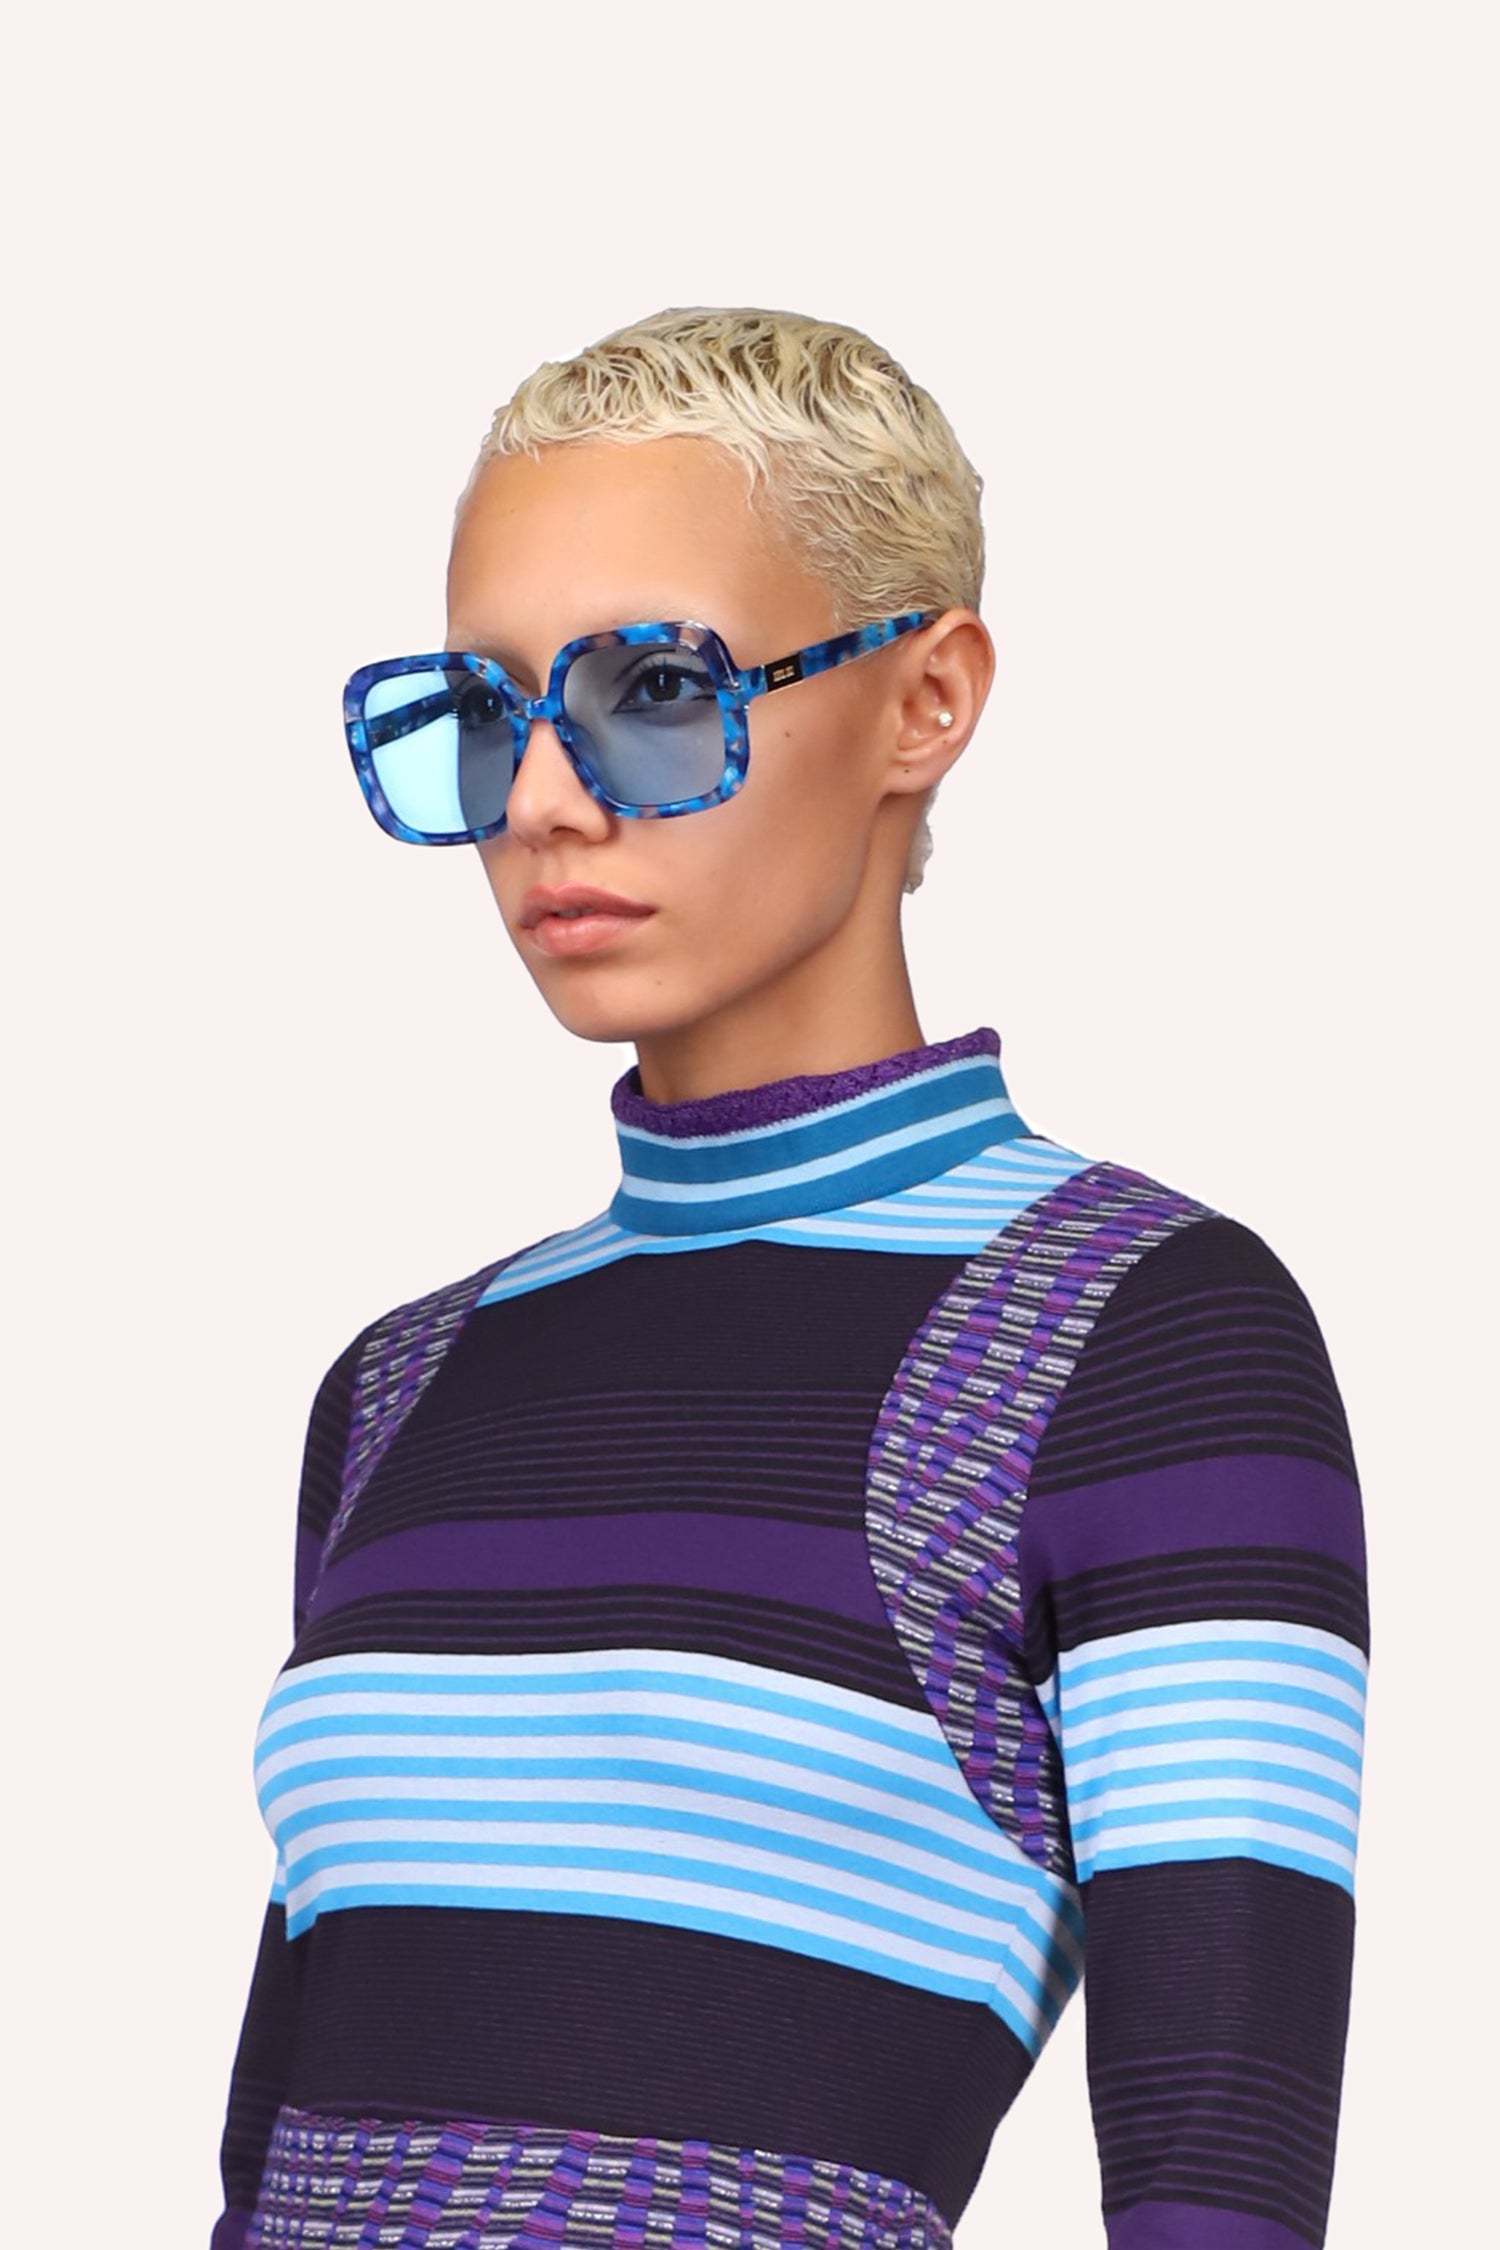 Square Sunglasses <br> Turquoise Multi - Anna Sui